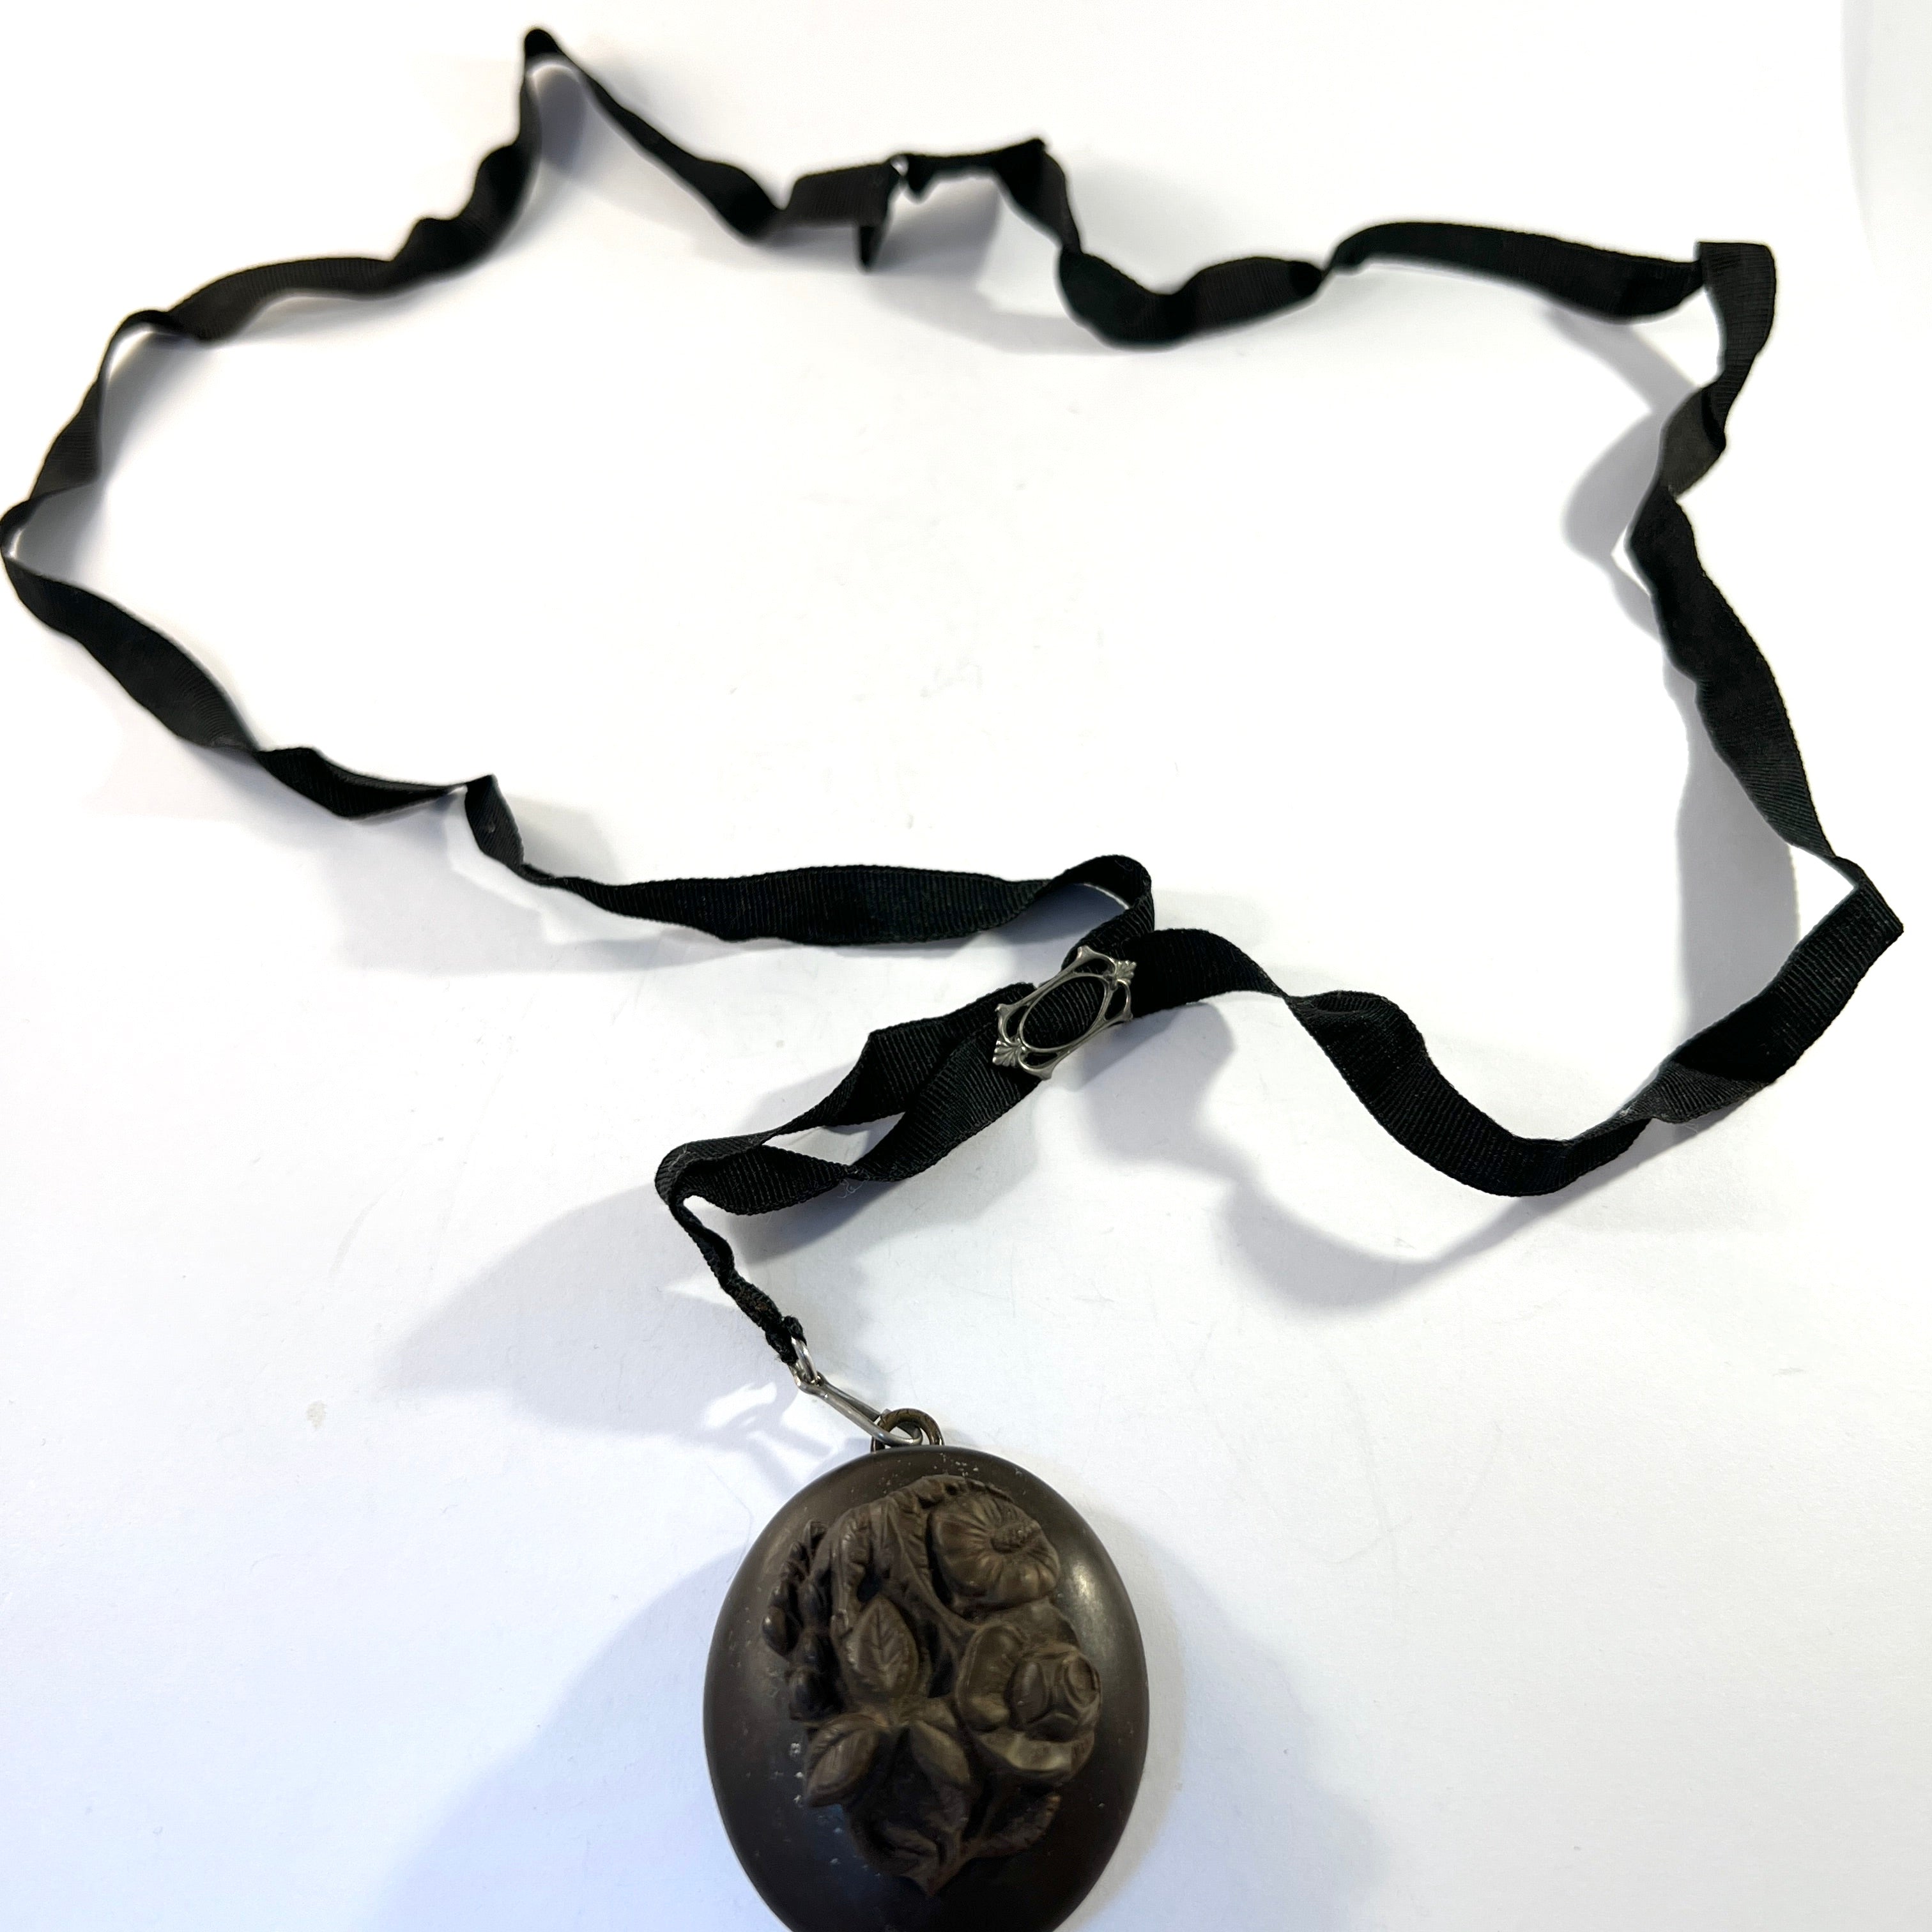 Antique Victorian Gutta Percha Locket Pendant Necklace.